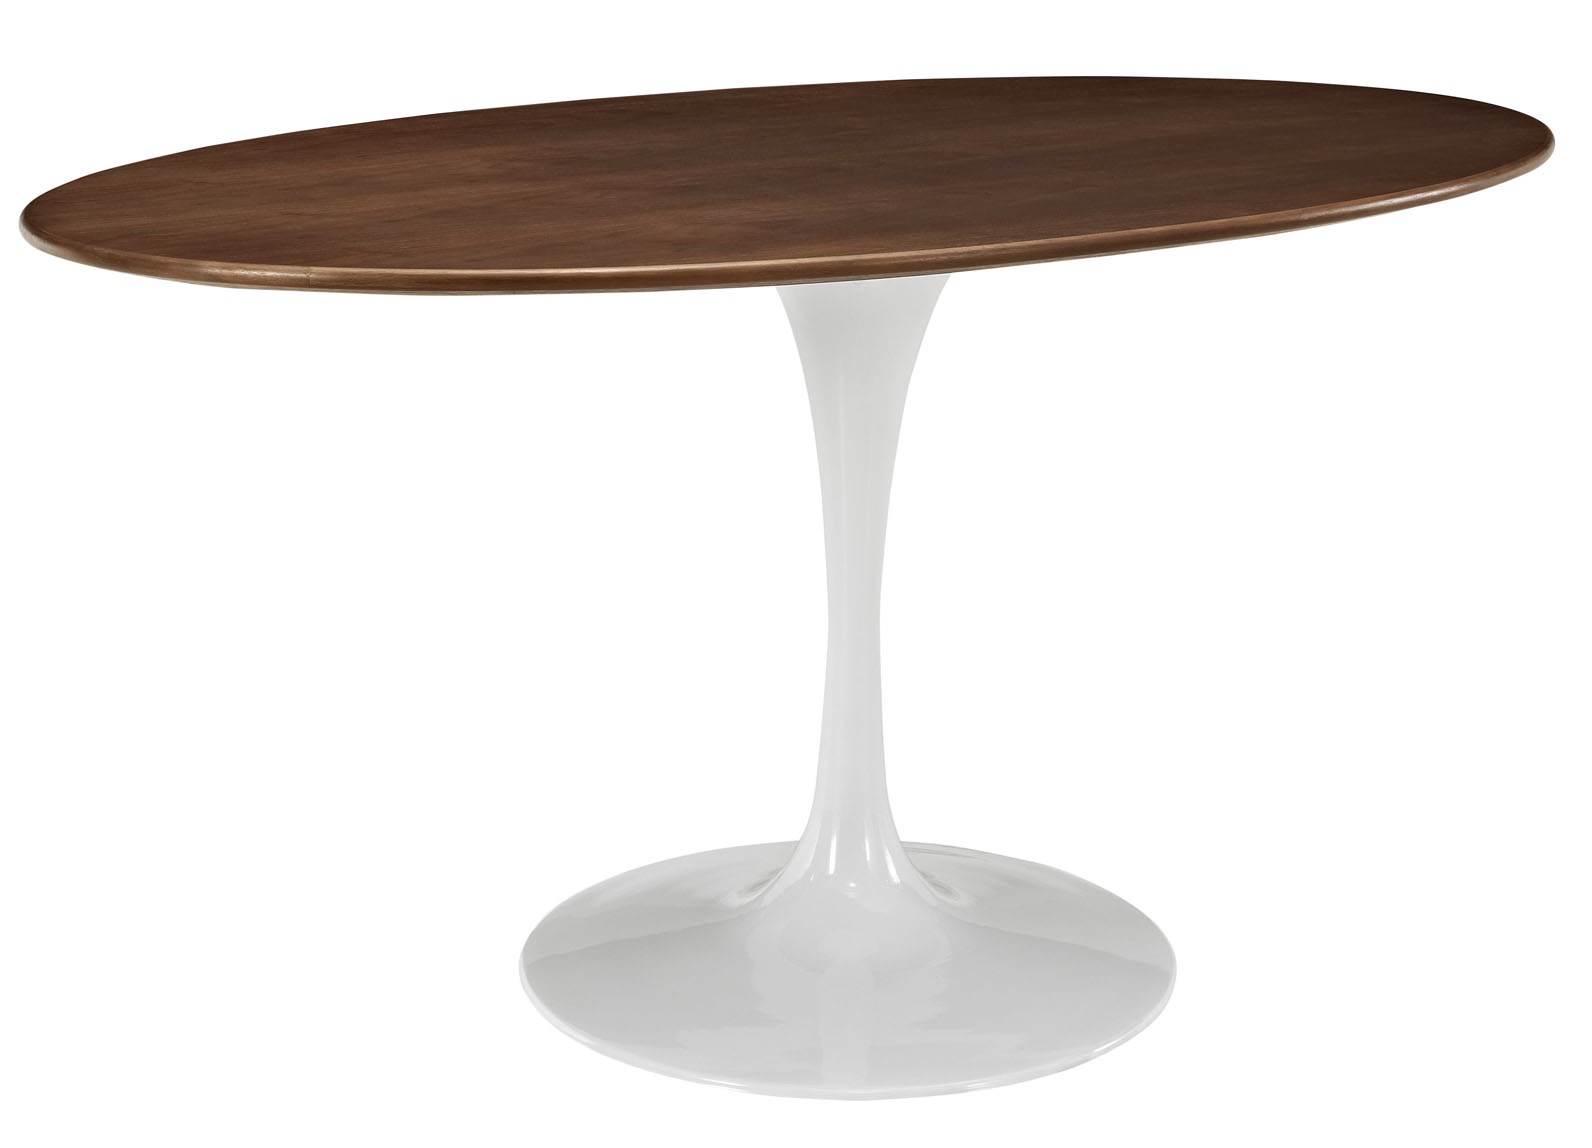 flower-dining-table-oval-walnut.jpg